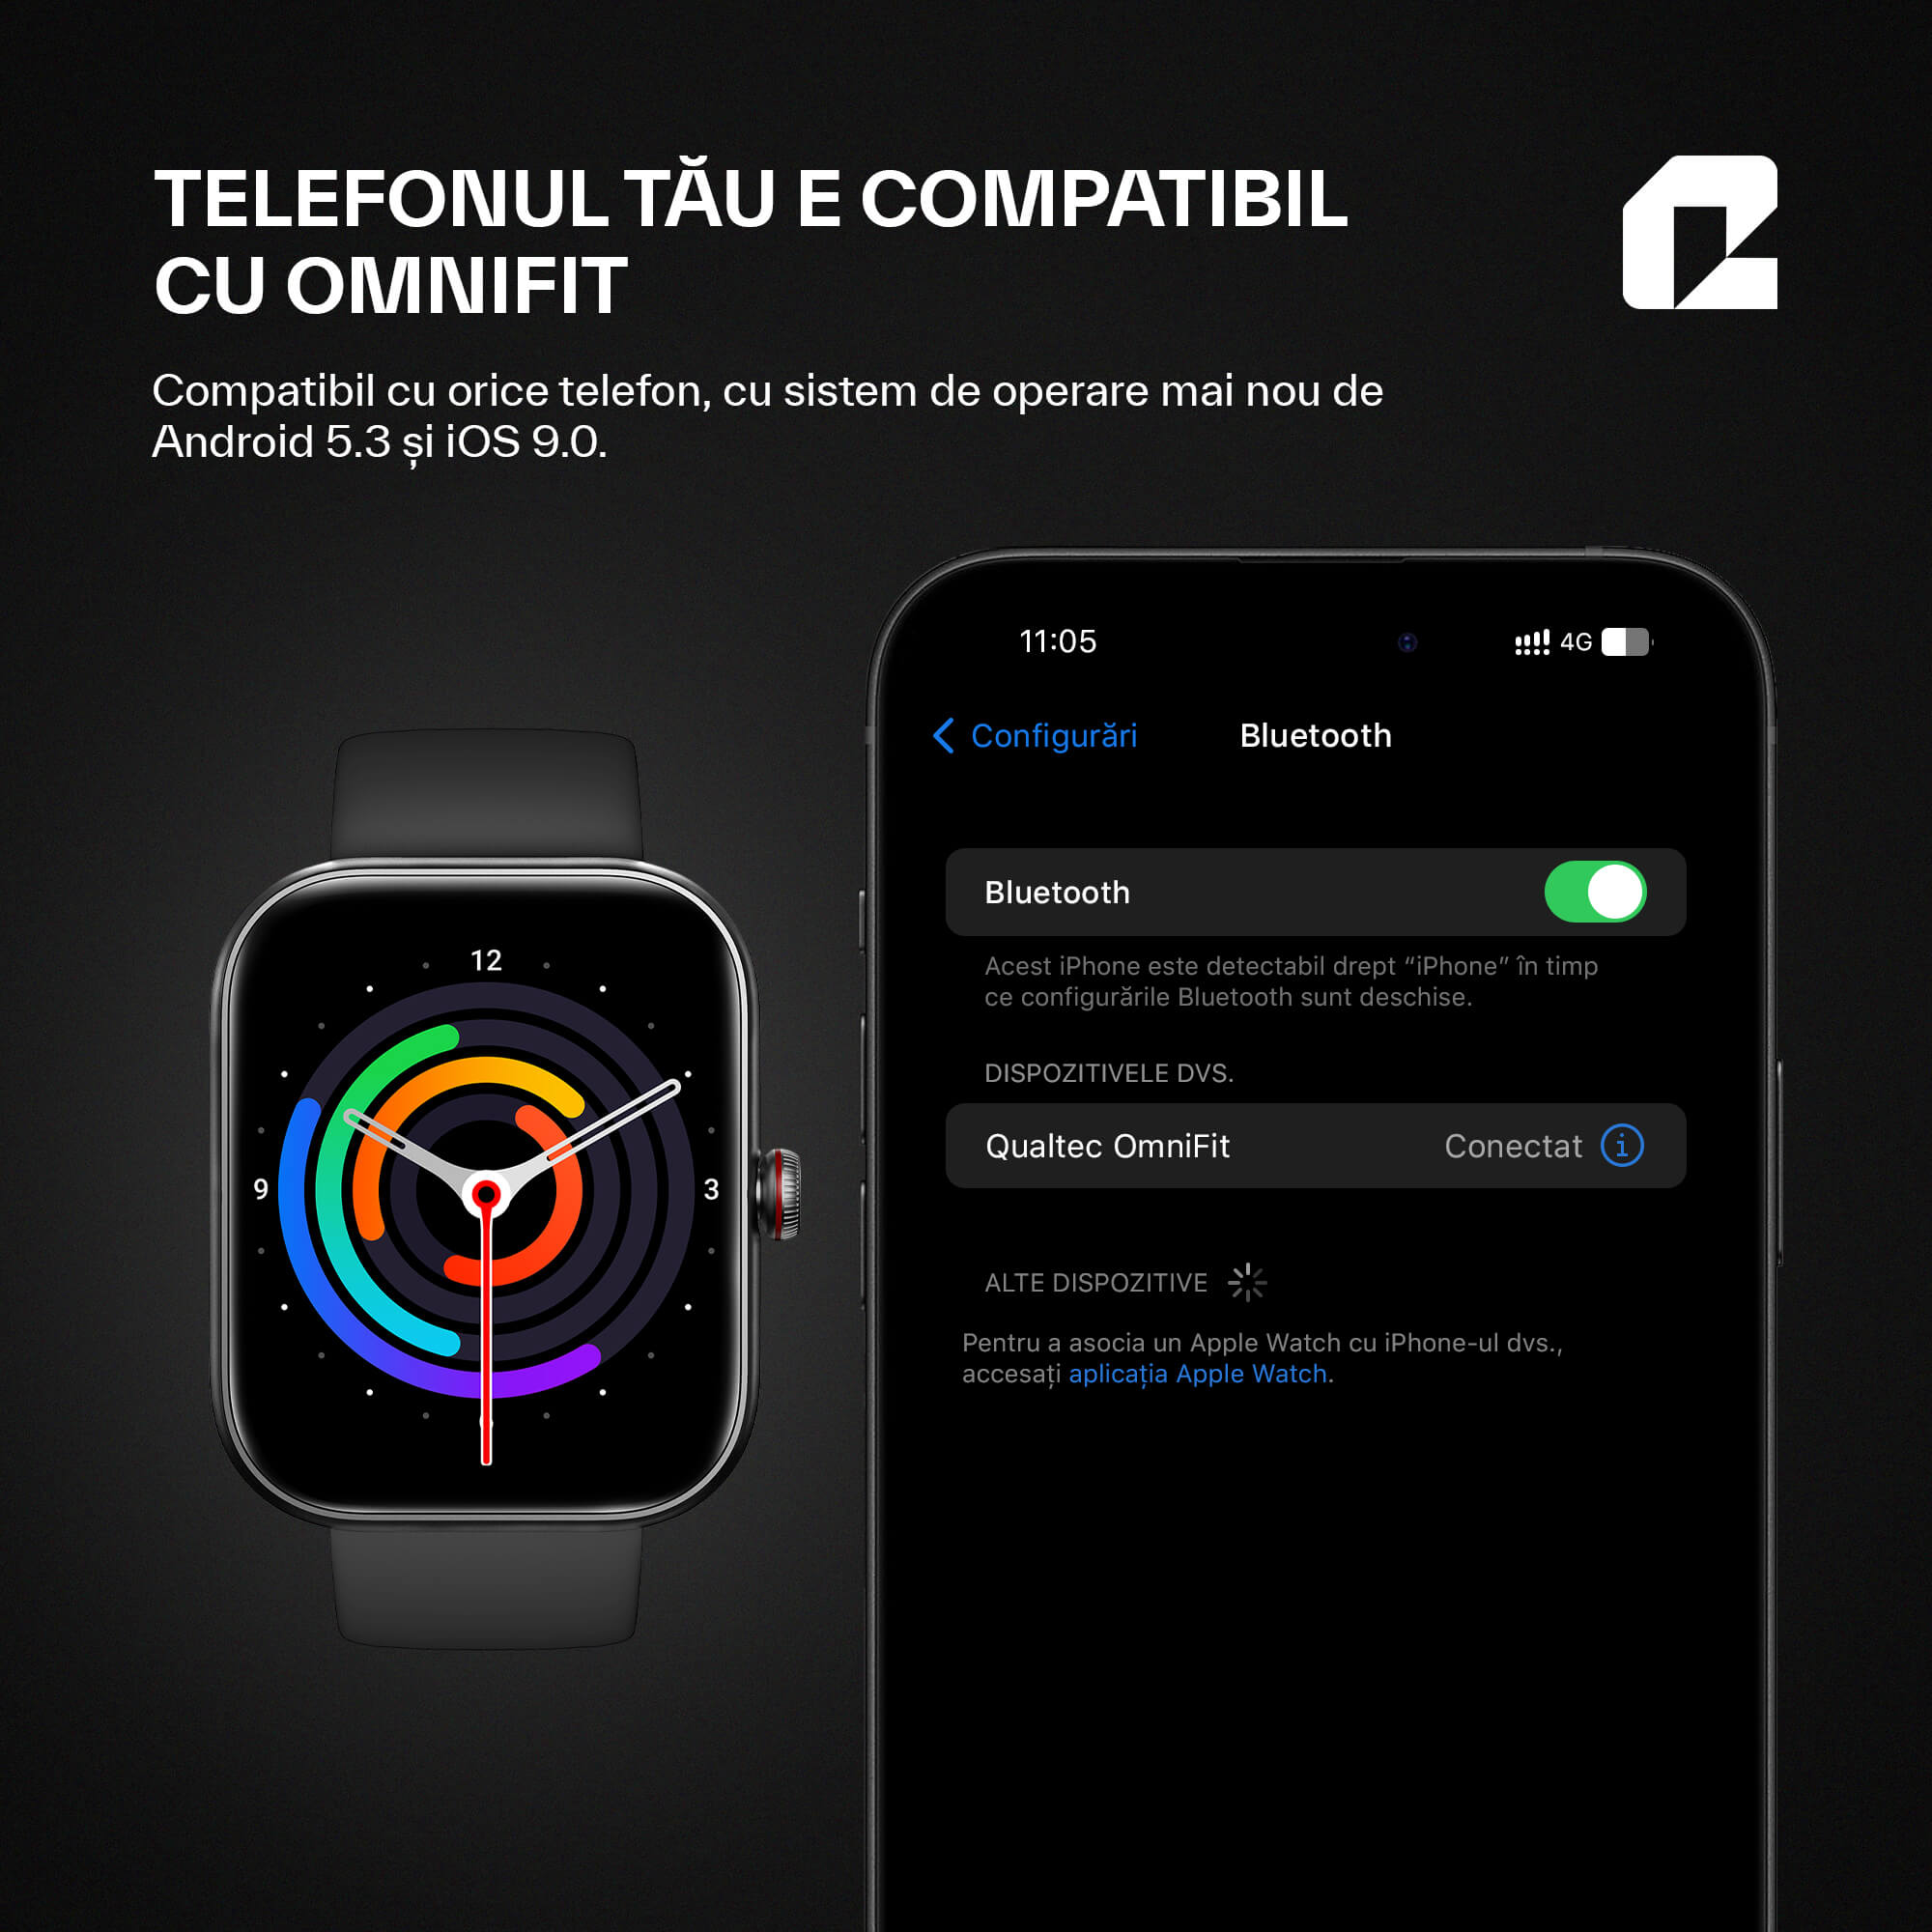 OmniFit qualtec smartwatch bluetooth compatibilitate universala telefon